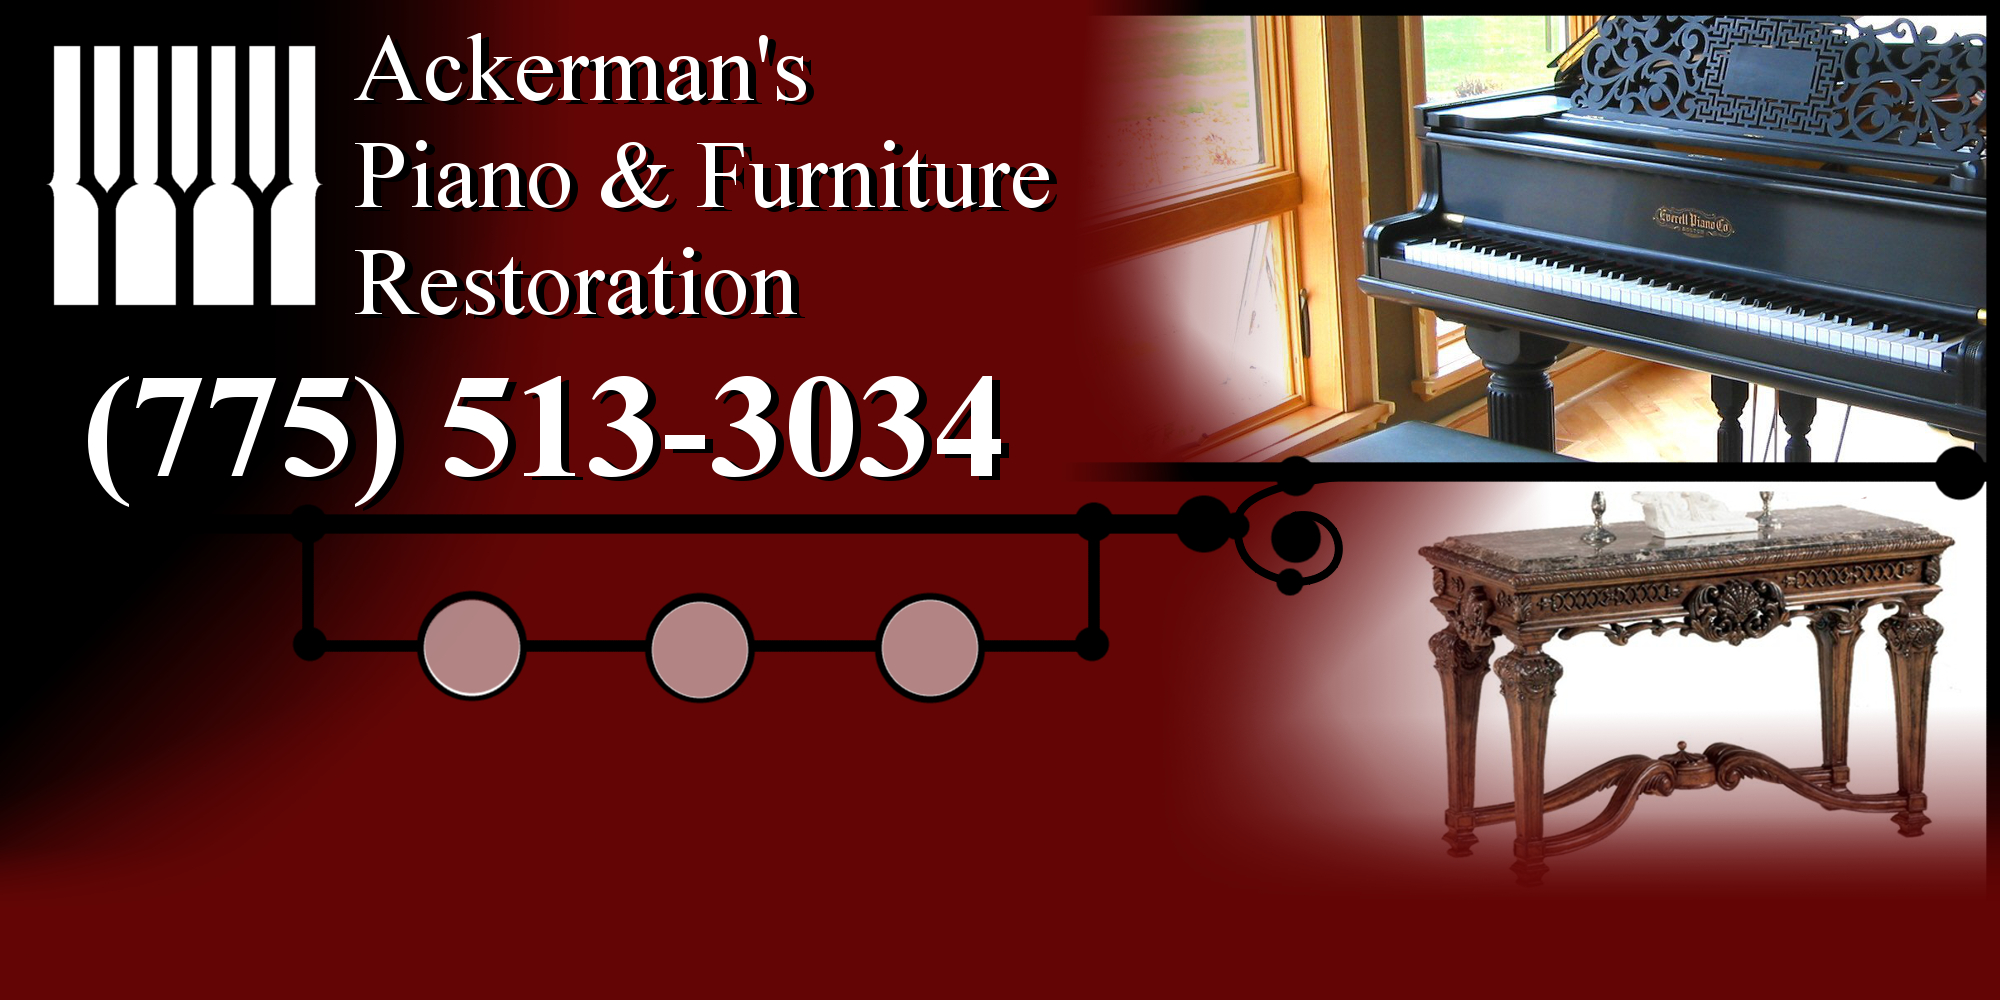 Ackerman's Piano & Furniture Restoration Contact page - 702-556-9940